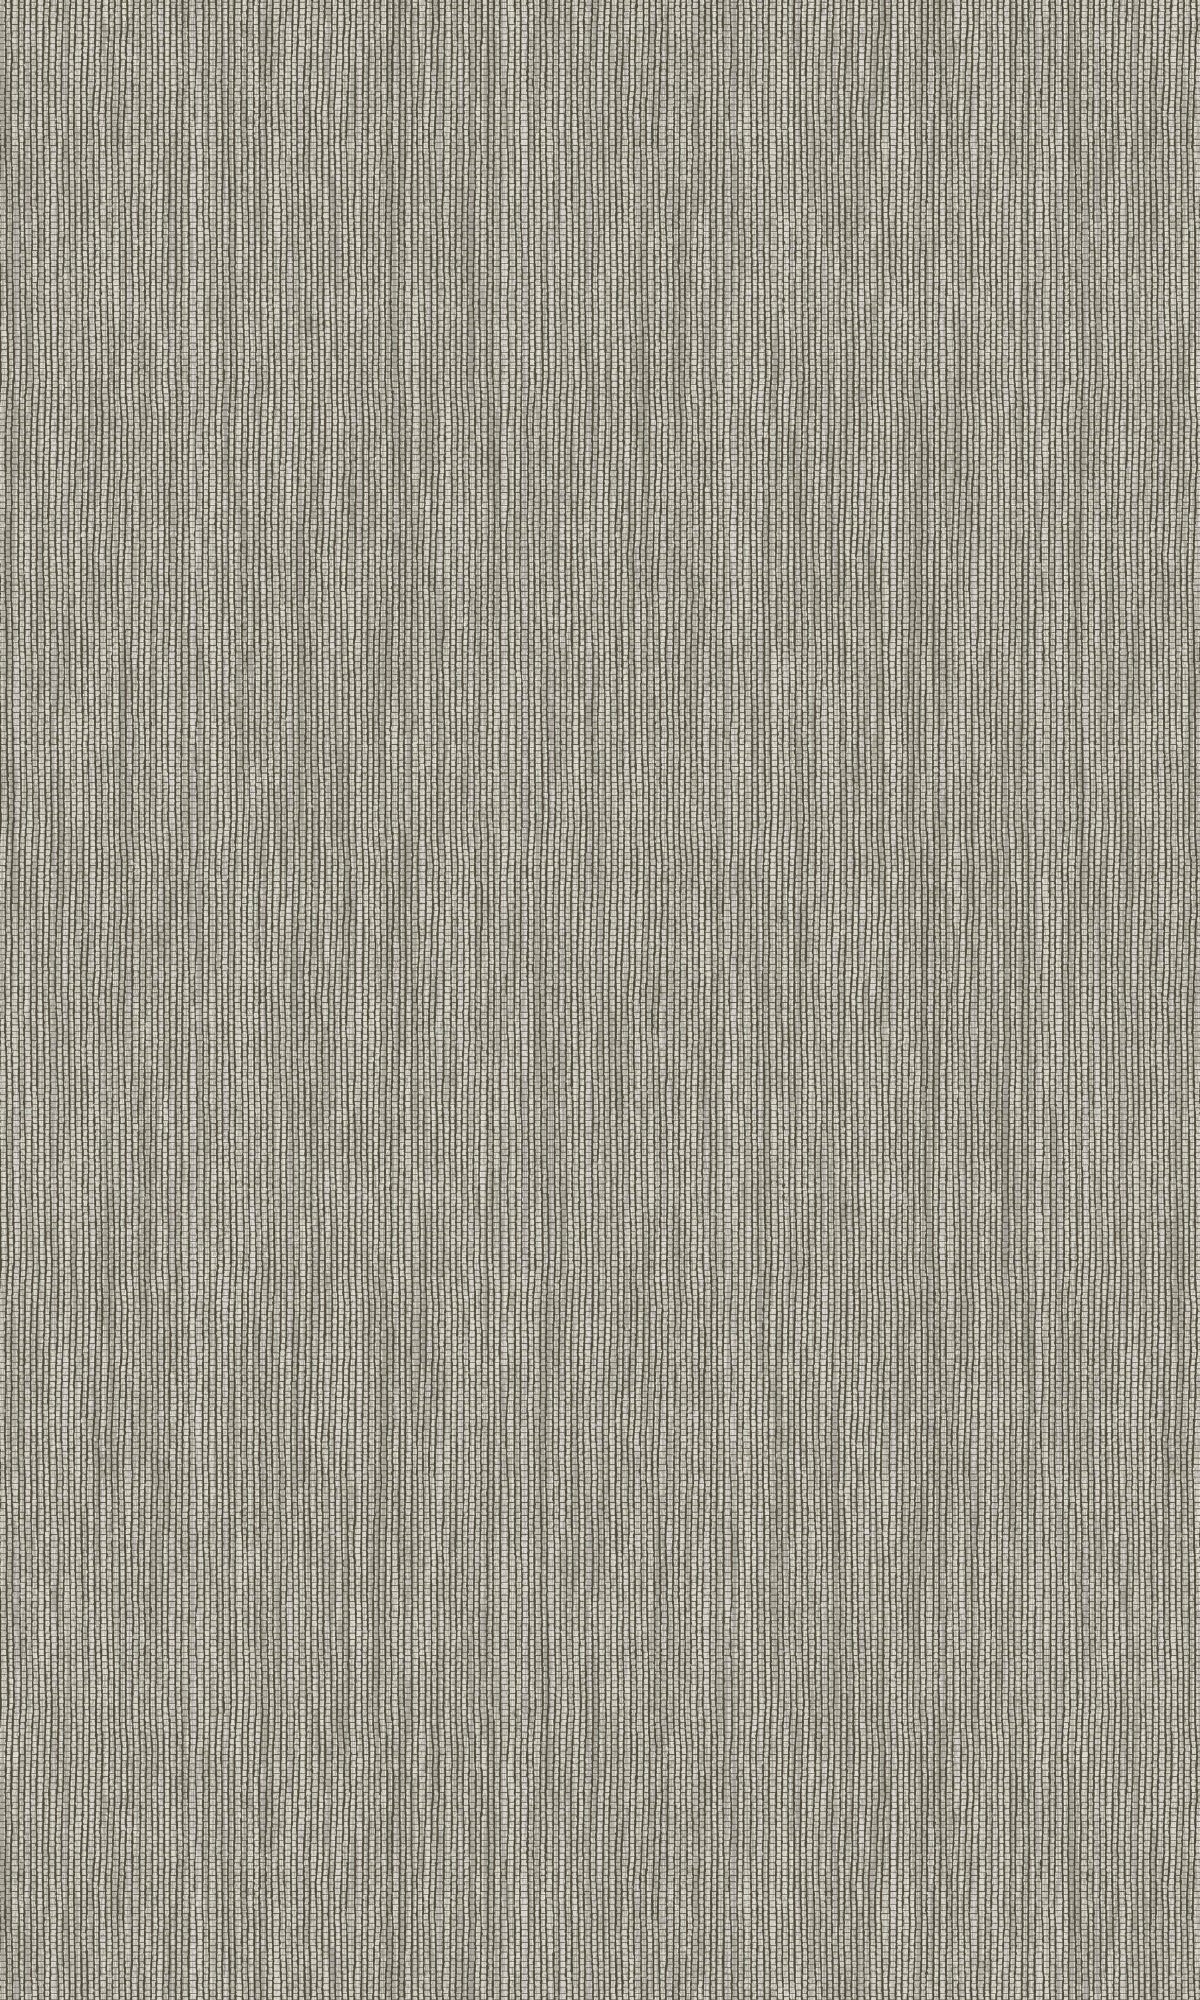 Grey Plain Textile Textured Wallpaper R9071